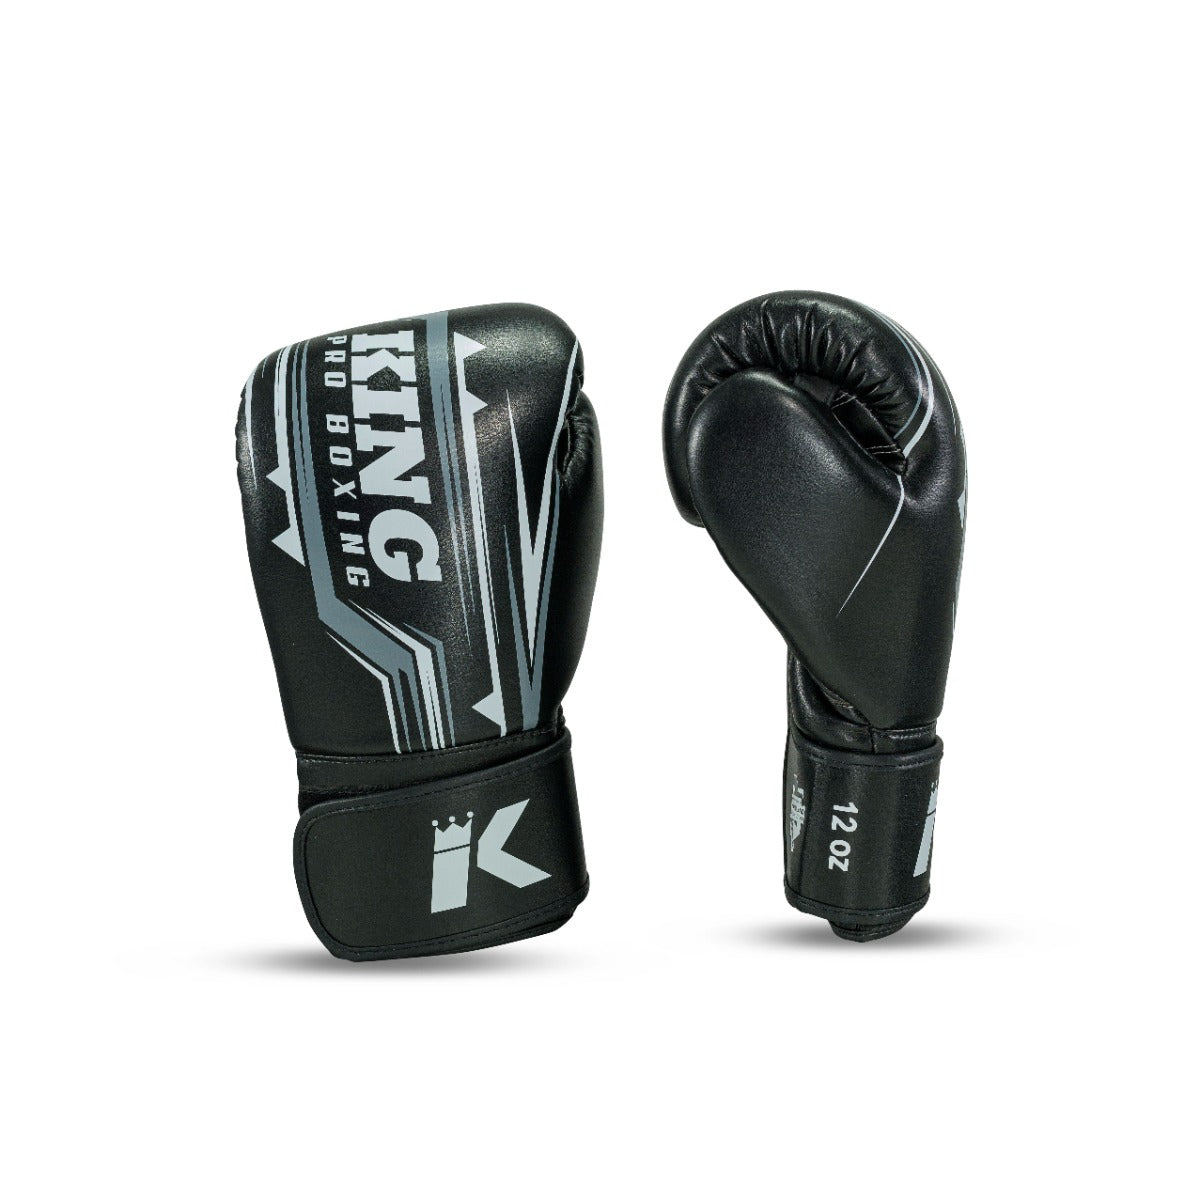 King PRO boxing boxing gloves - BG SPARTAN 1